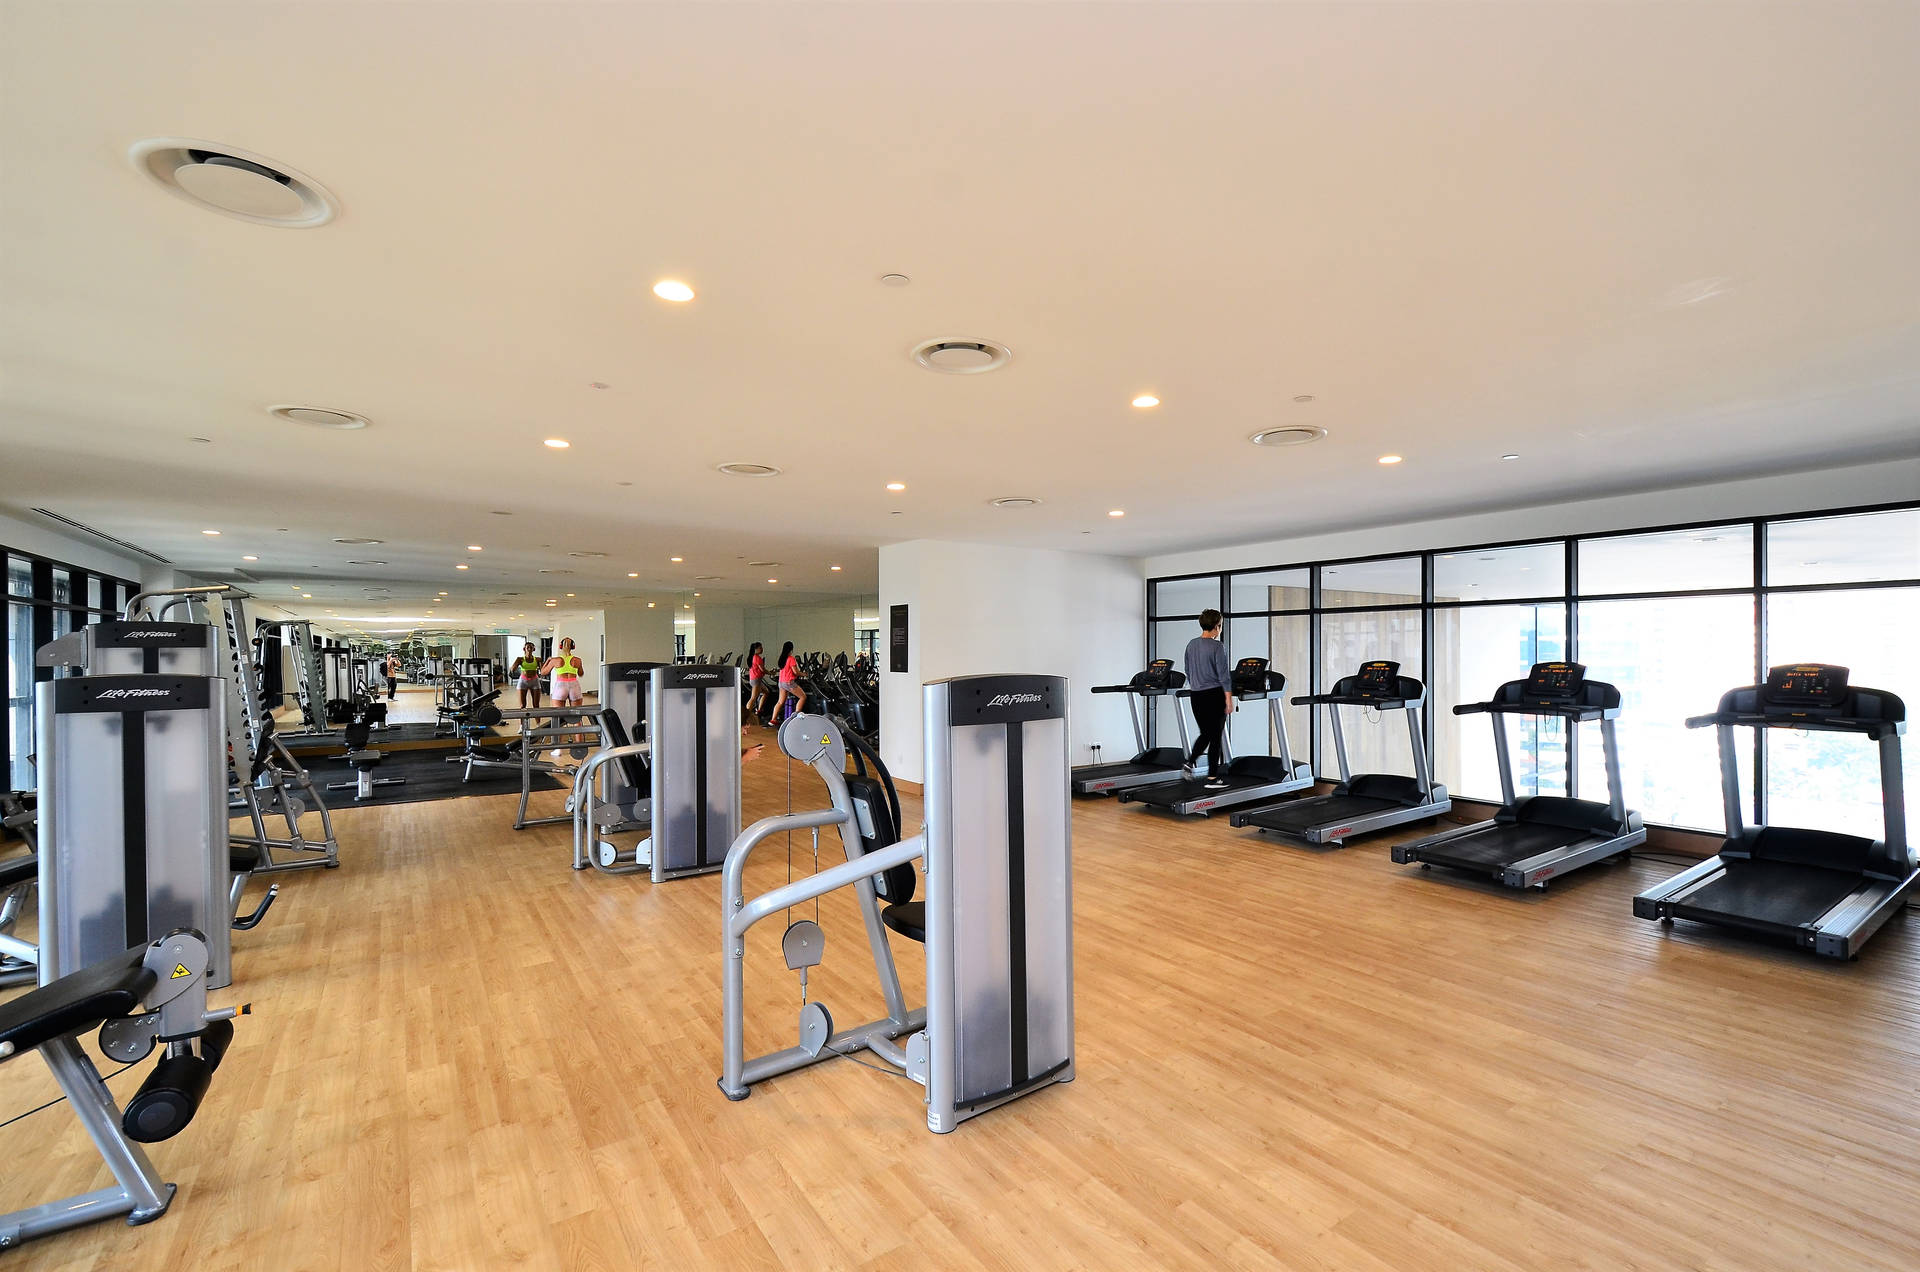 Wood-paneled Gym With Treadmills Background